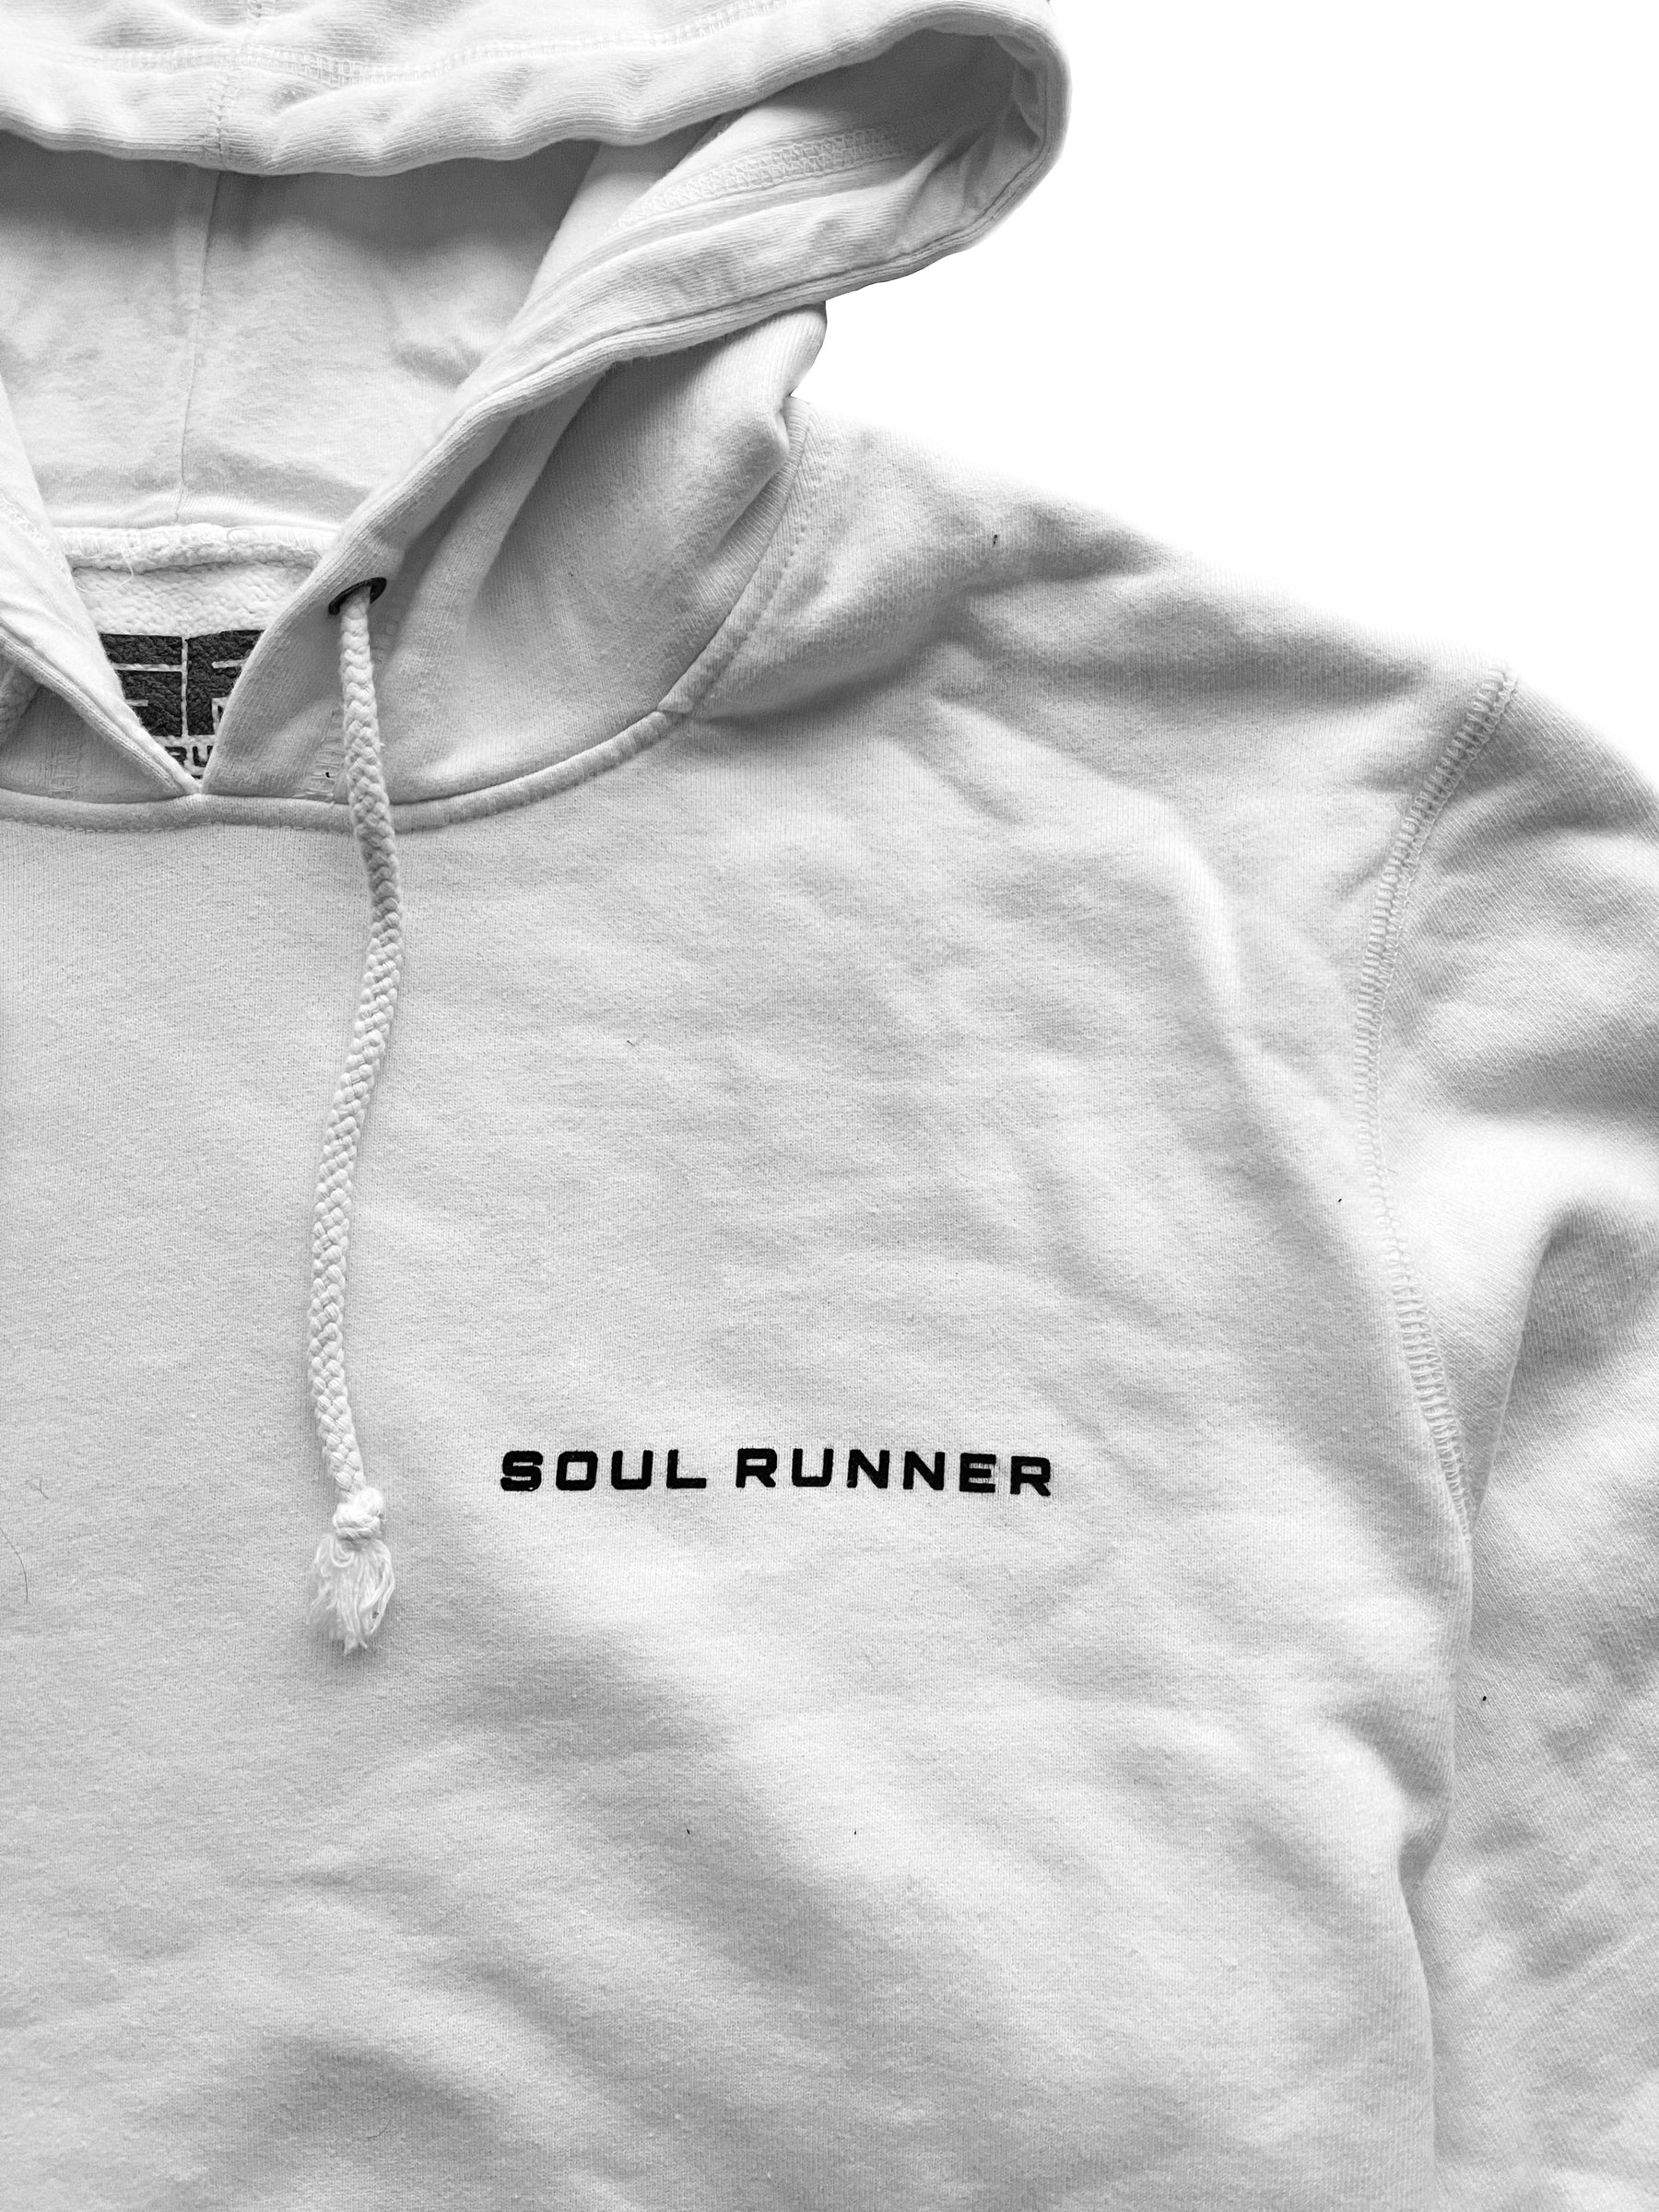 Soul Runner by Tyreek Hill Merch